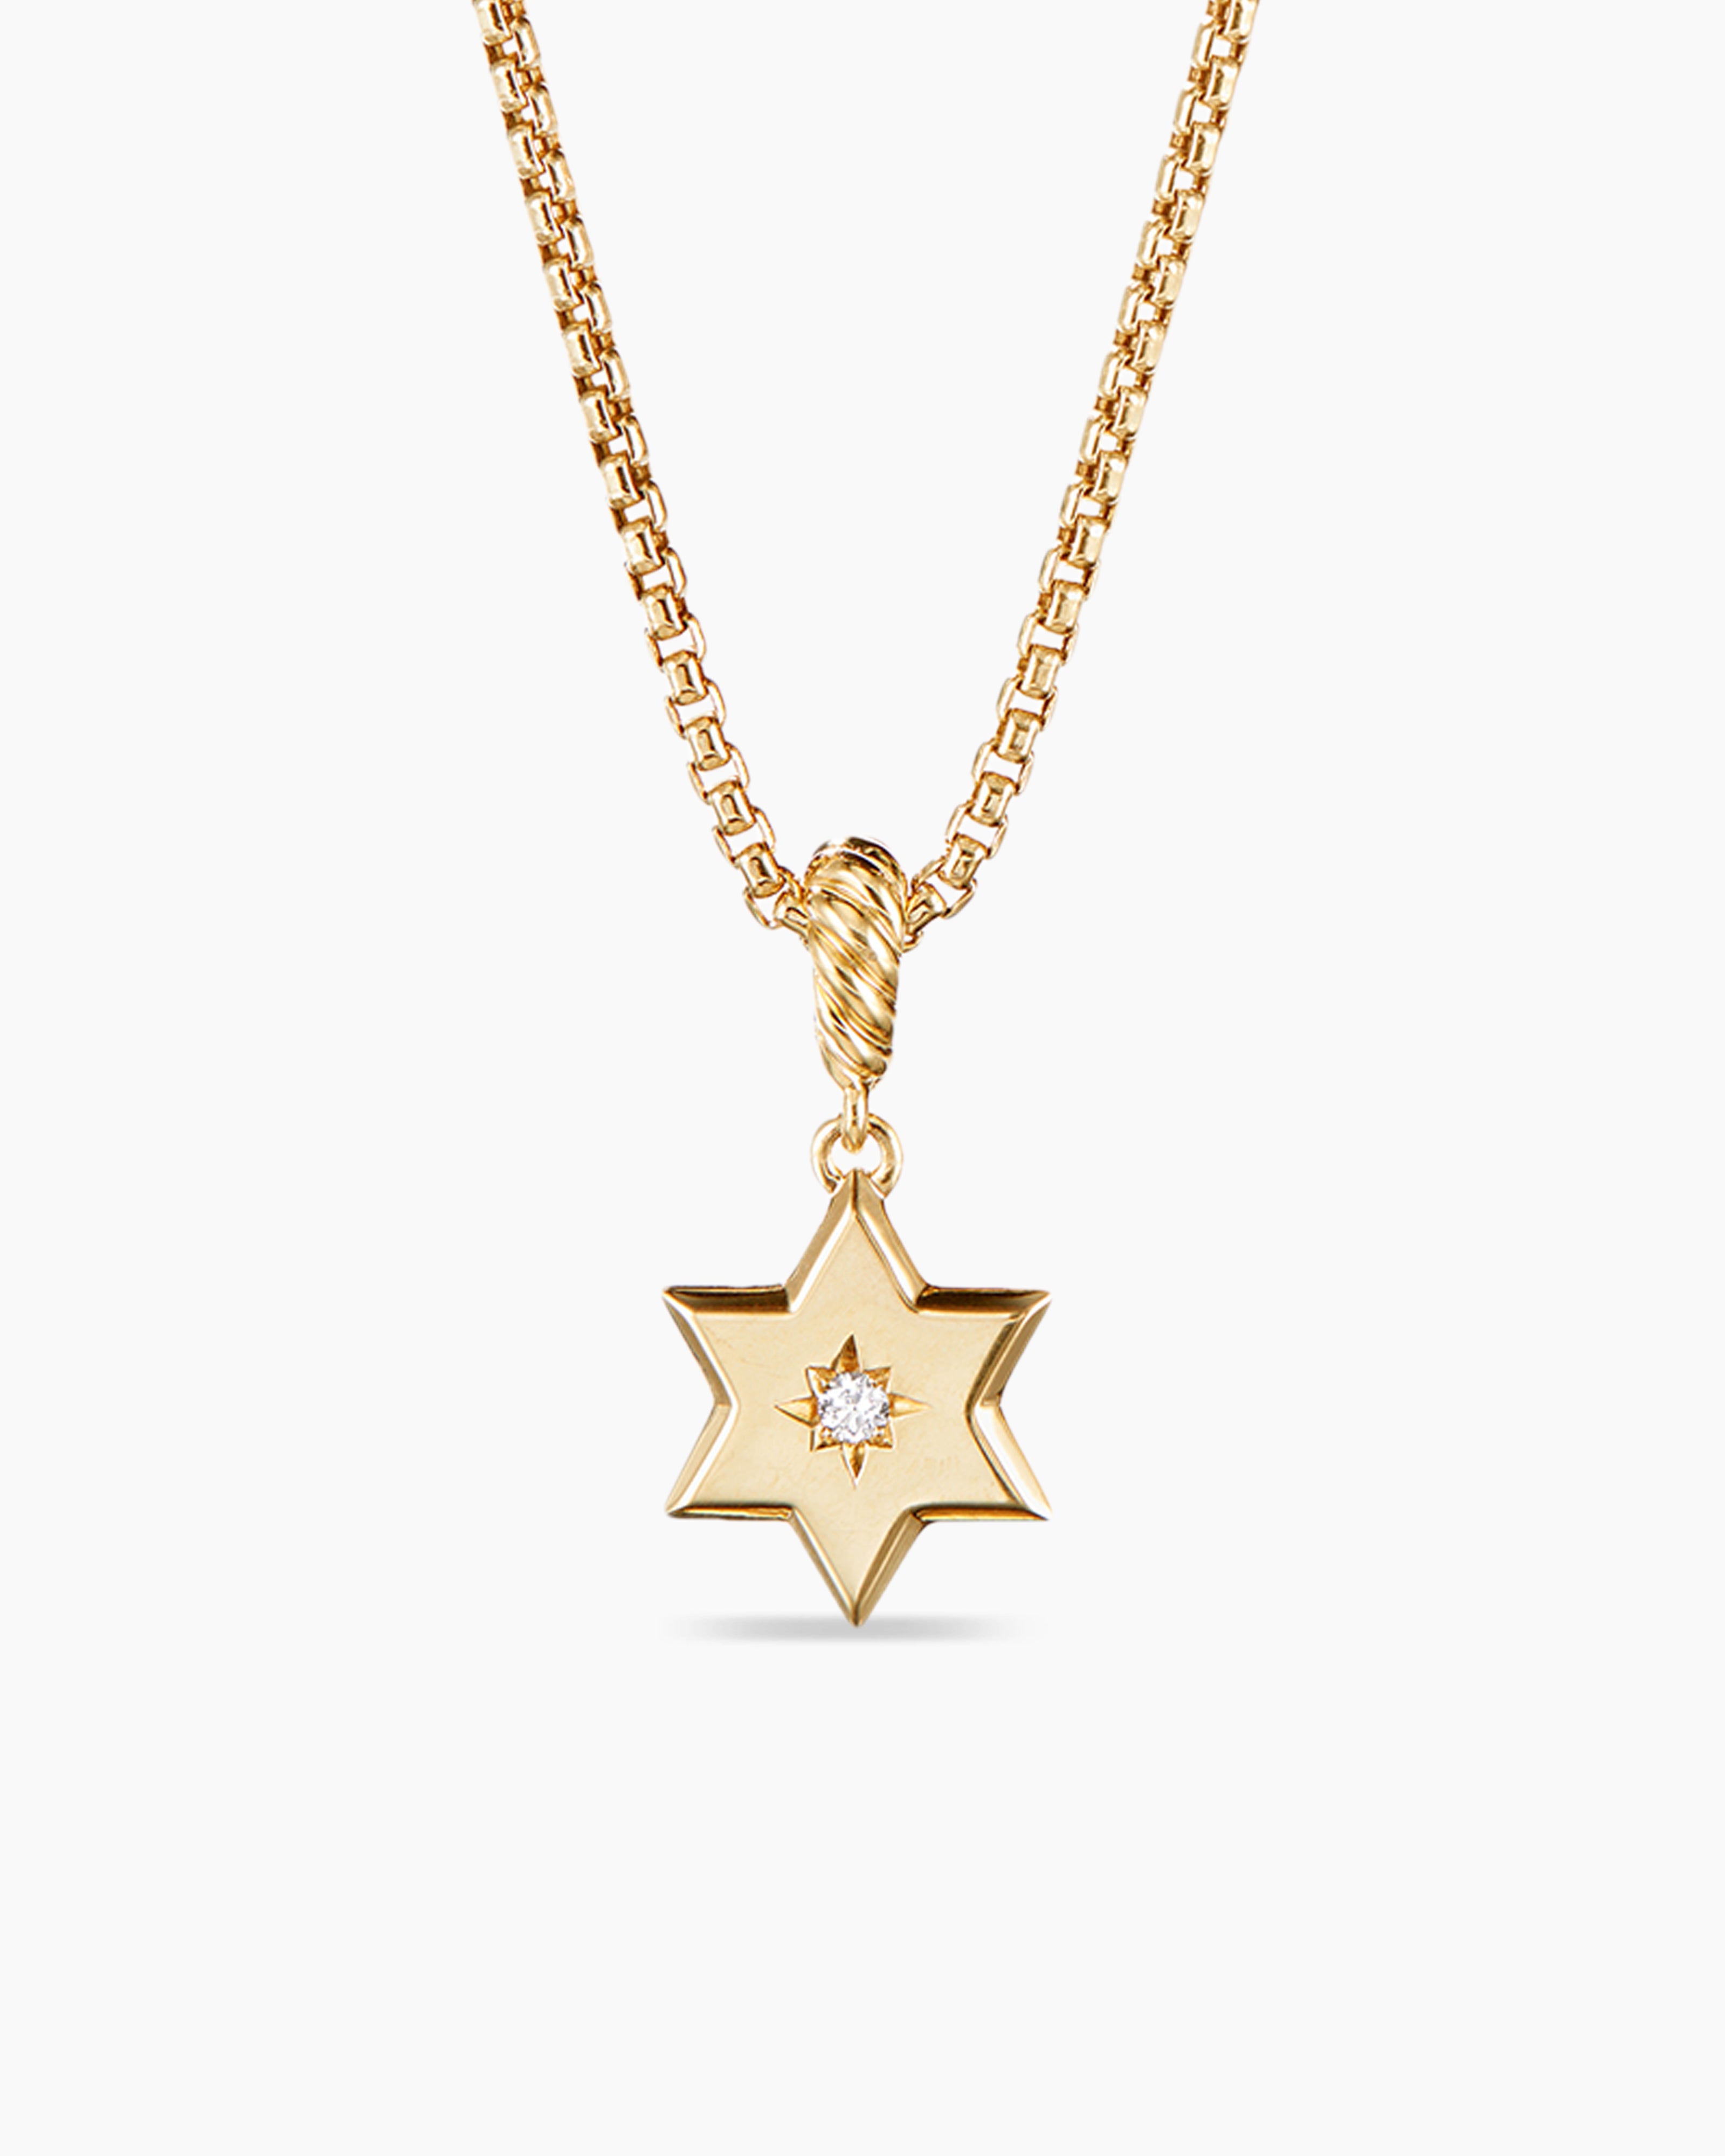 14k White Gold 'Star of David' Pendant - Diamonds and Enamel